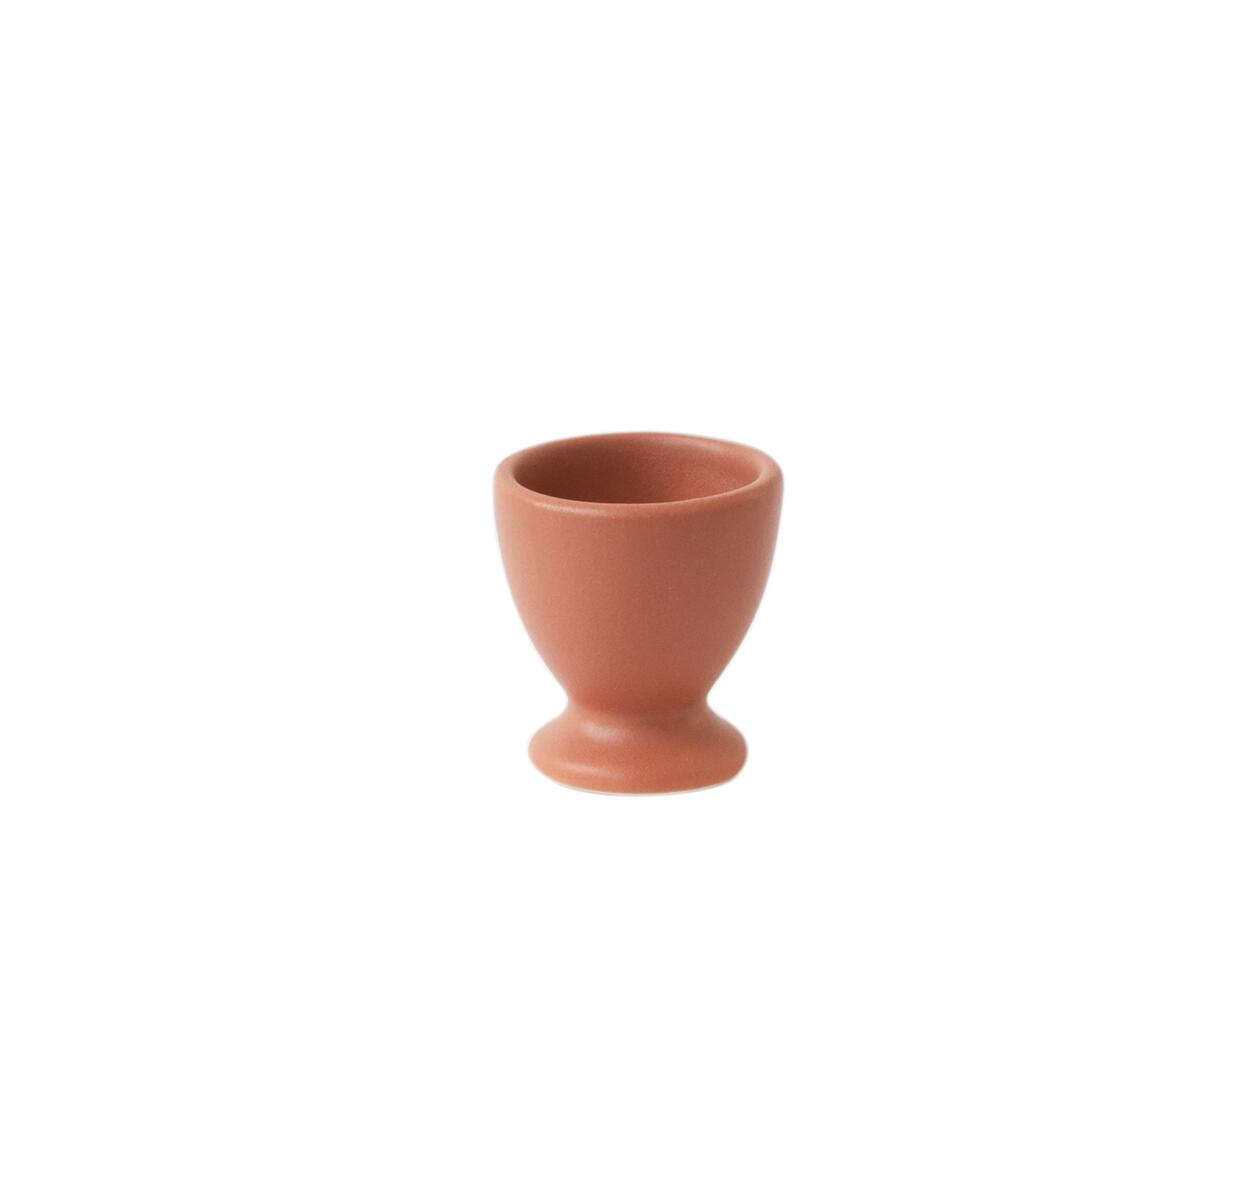 eggcup jardin de maguelone grenade ceramic manufacturer